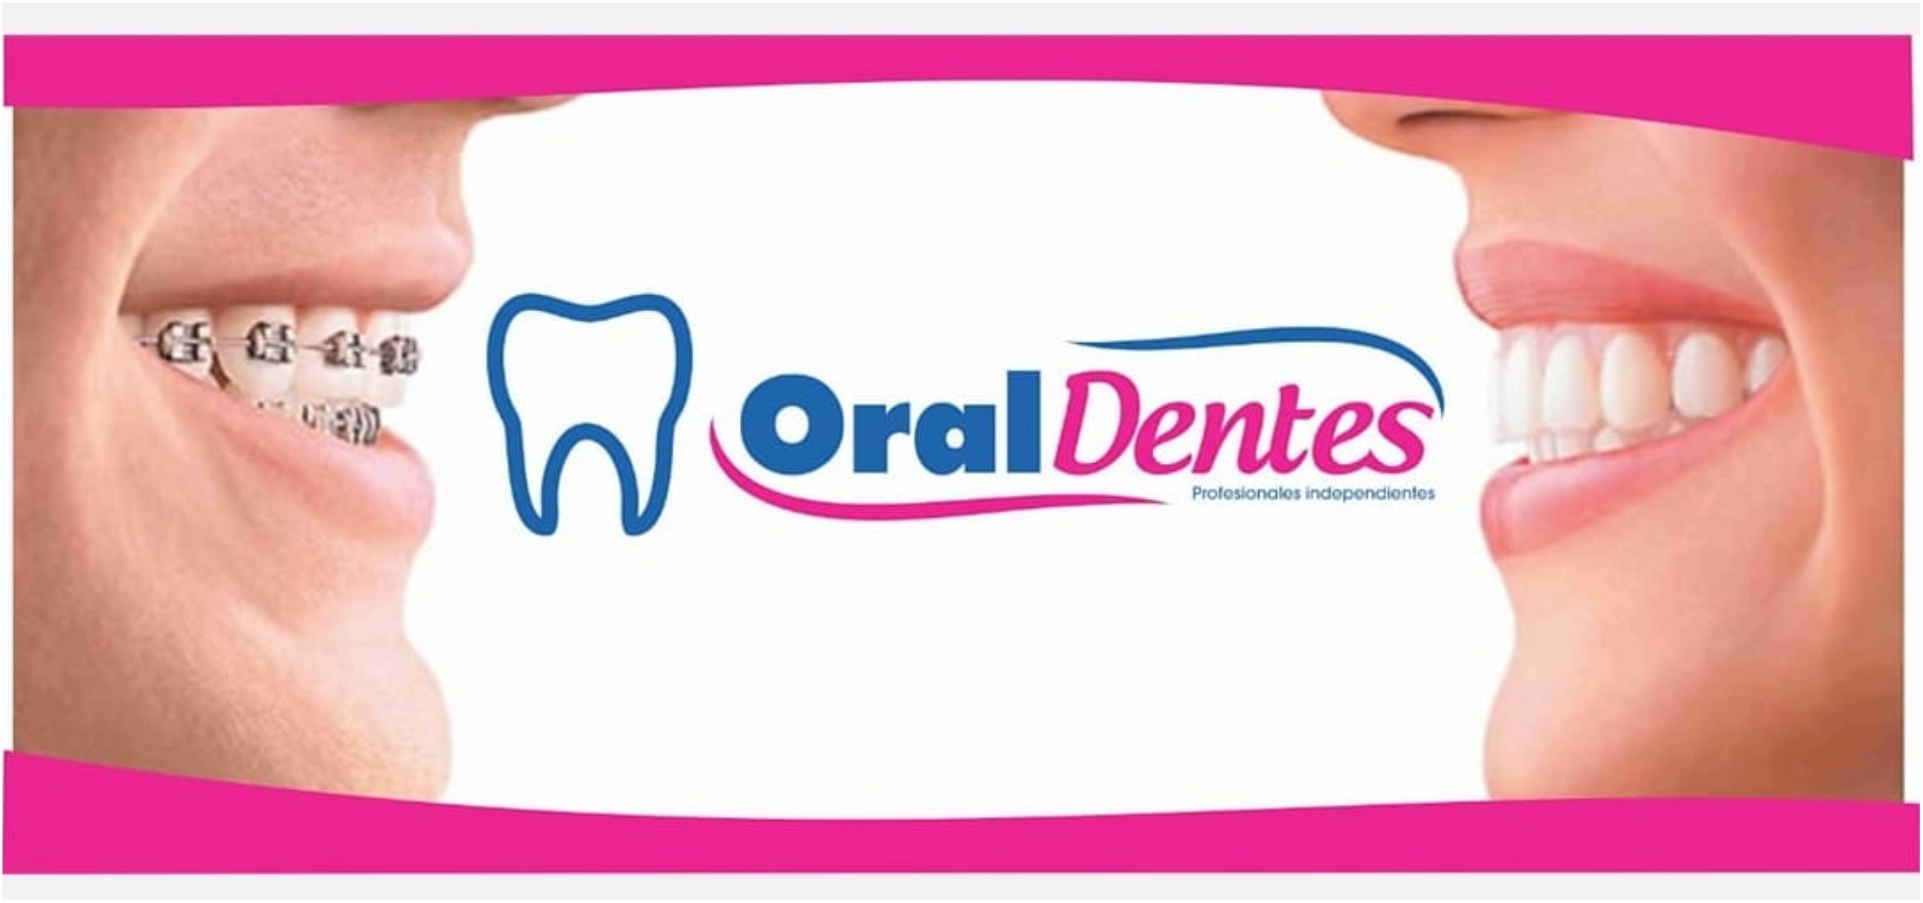 Oral Dentes